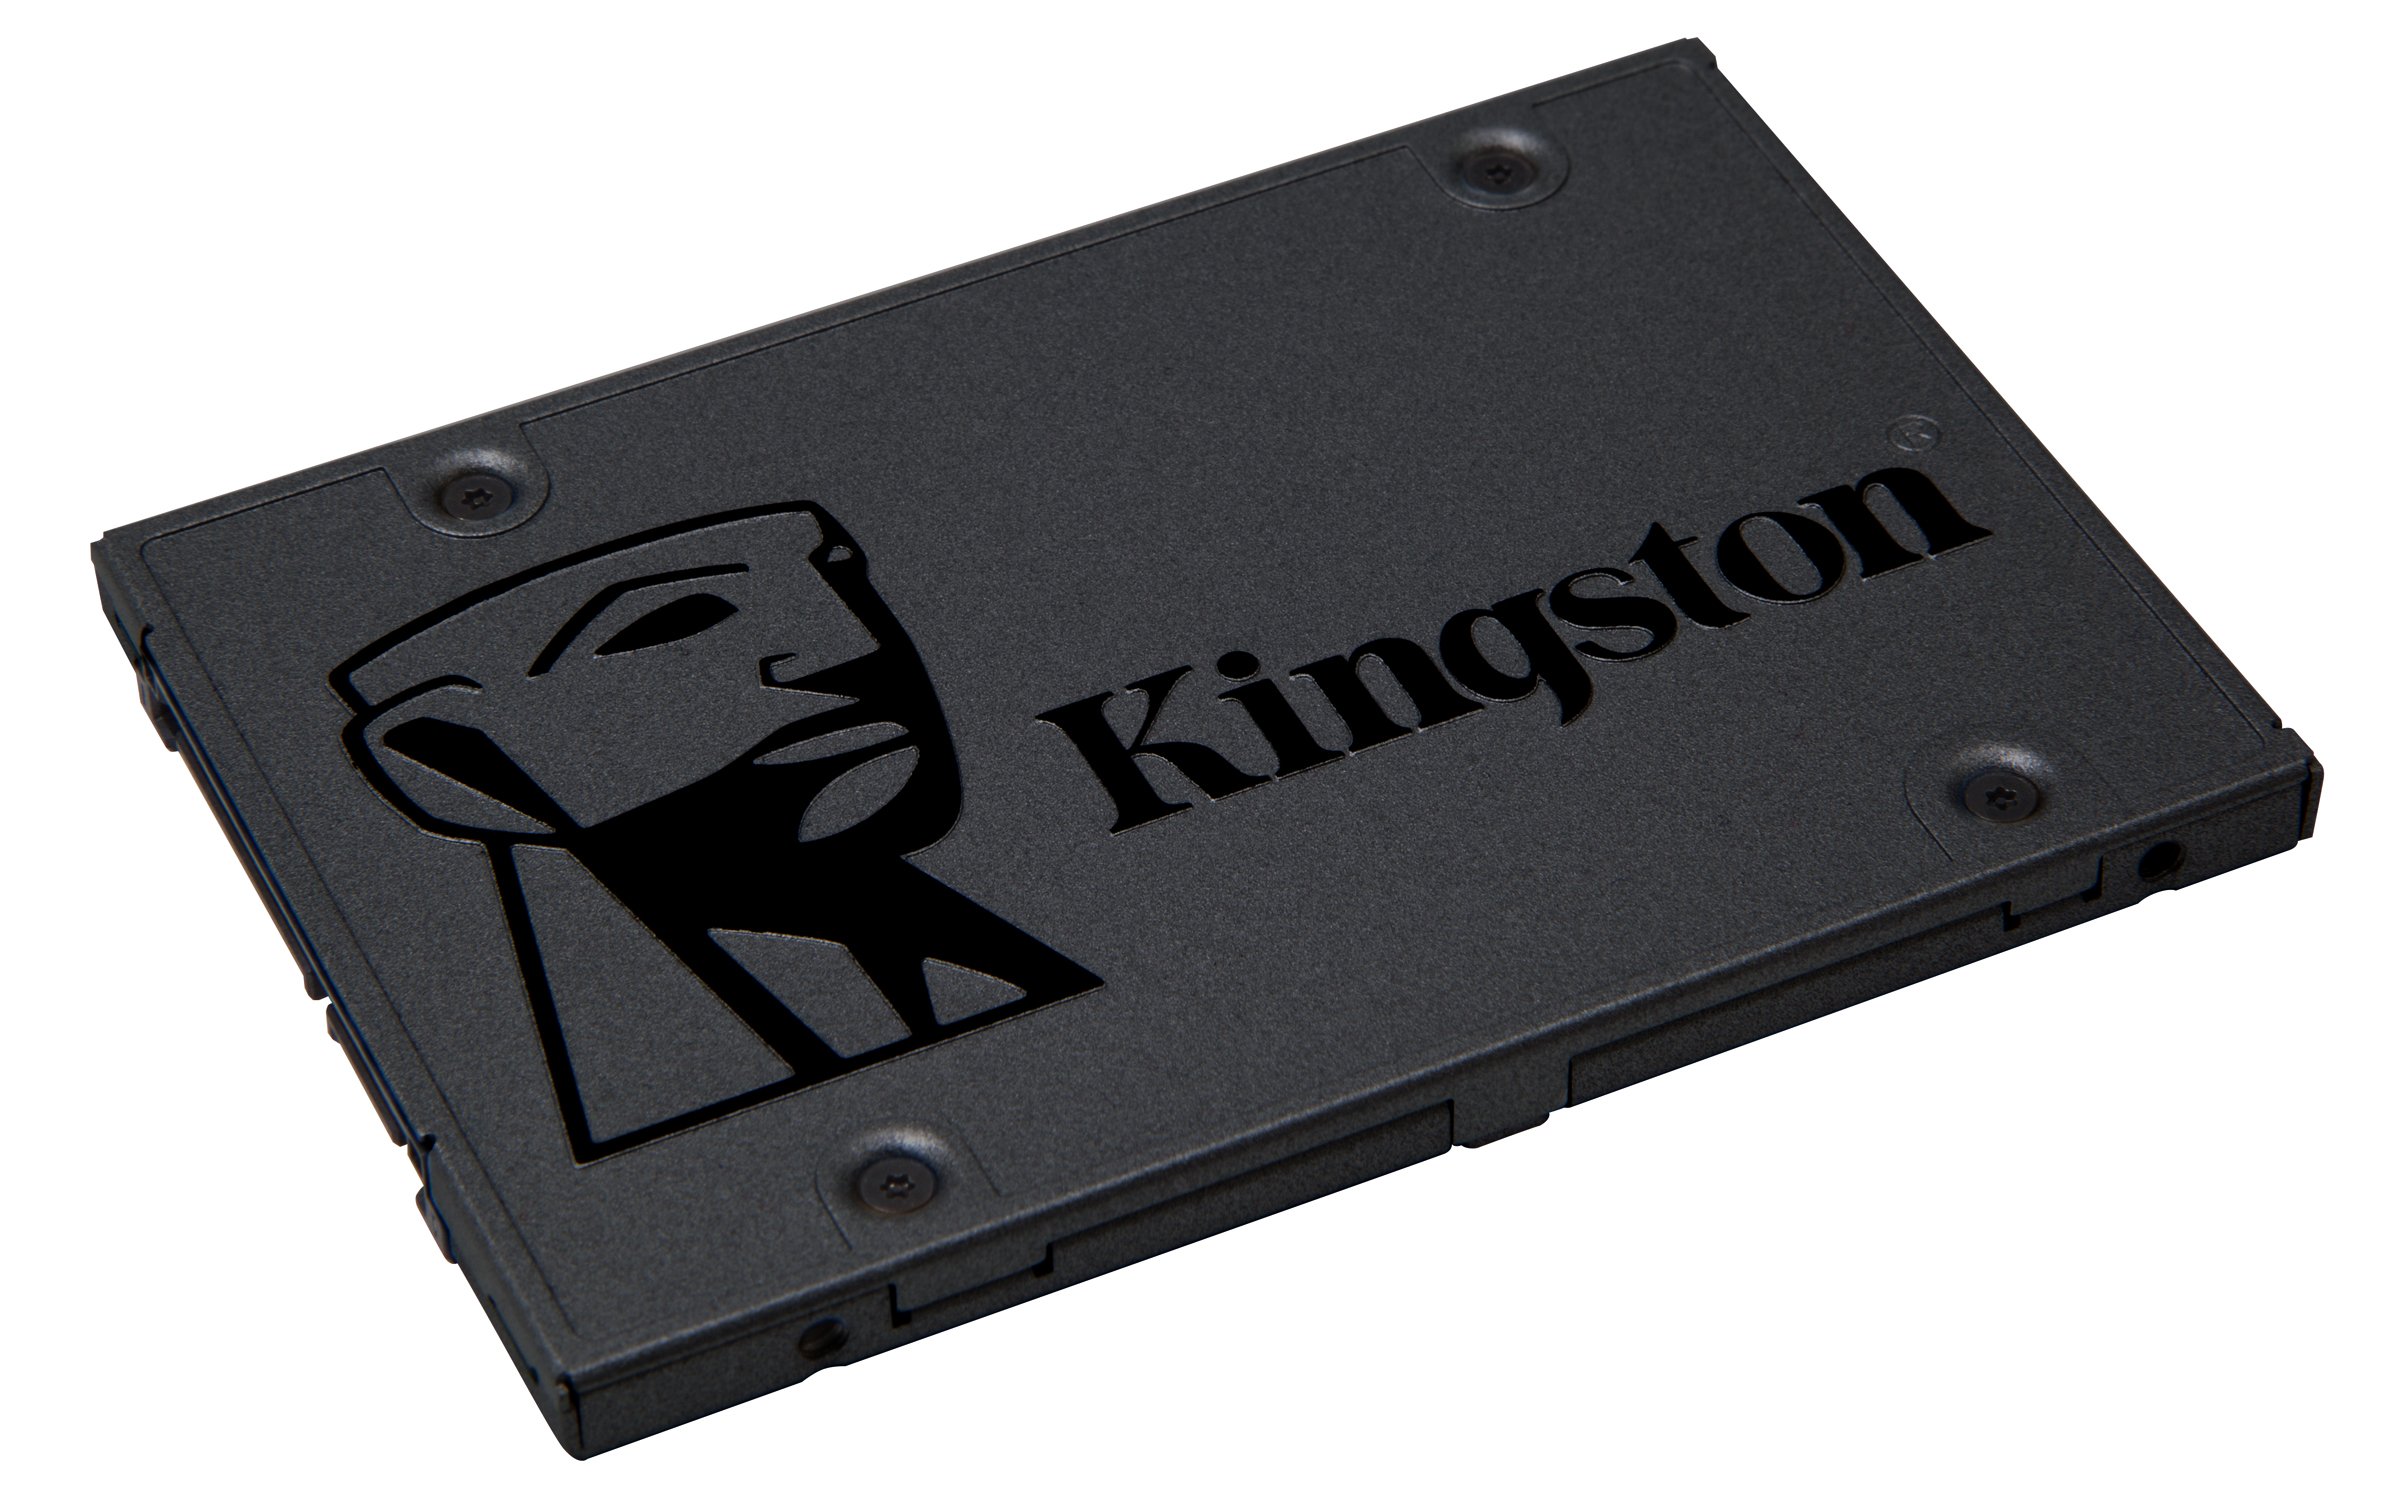 SSD ESTADO SOLIDO KINGSTON INT 240 GB A400 SATA 2.5 SSD 7MM, SA400S37240G - NULL